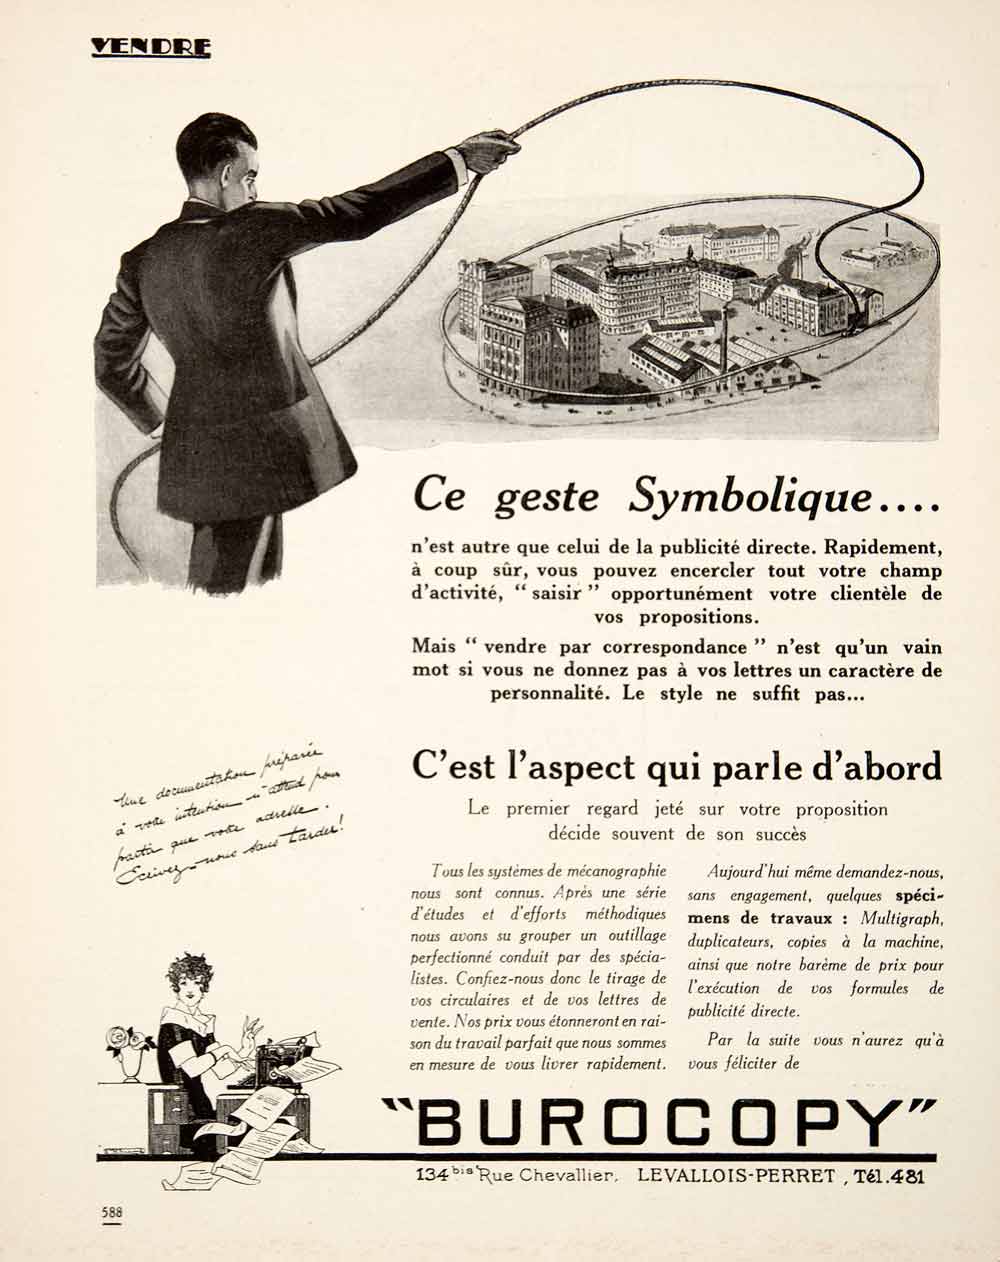 1925 Ad Burocopy 134 Rue Chevallier Levallois-Perret Lasso Advertising VEN4